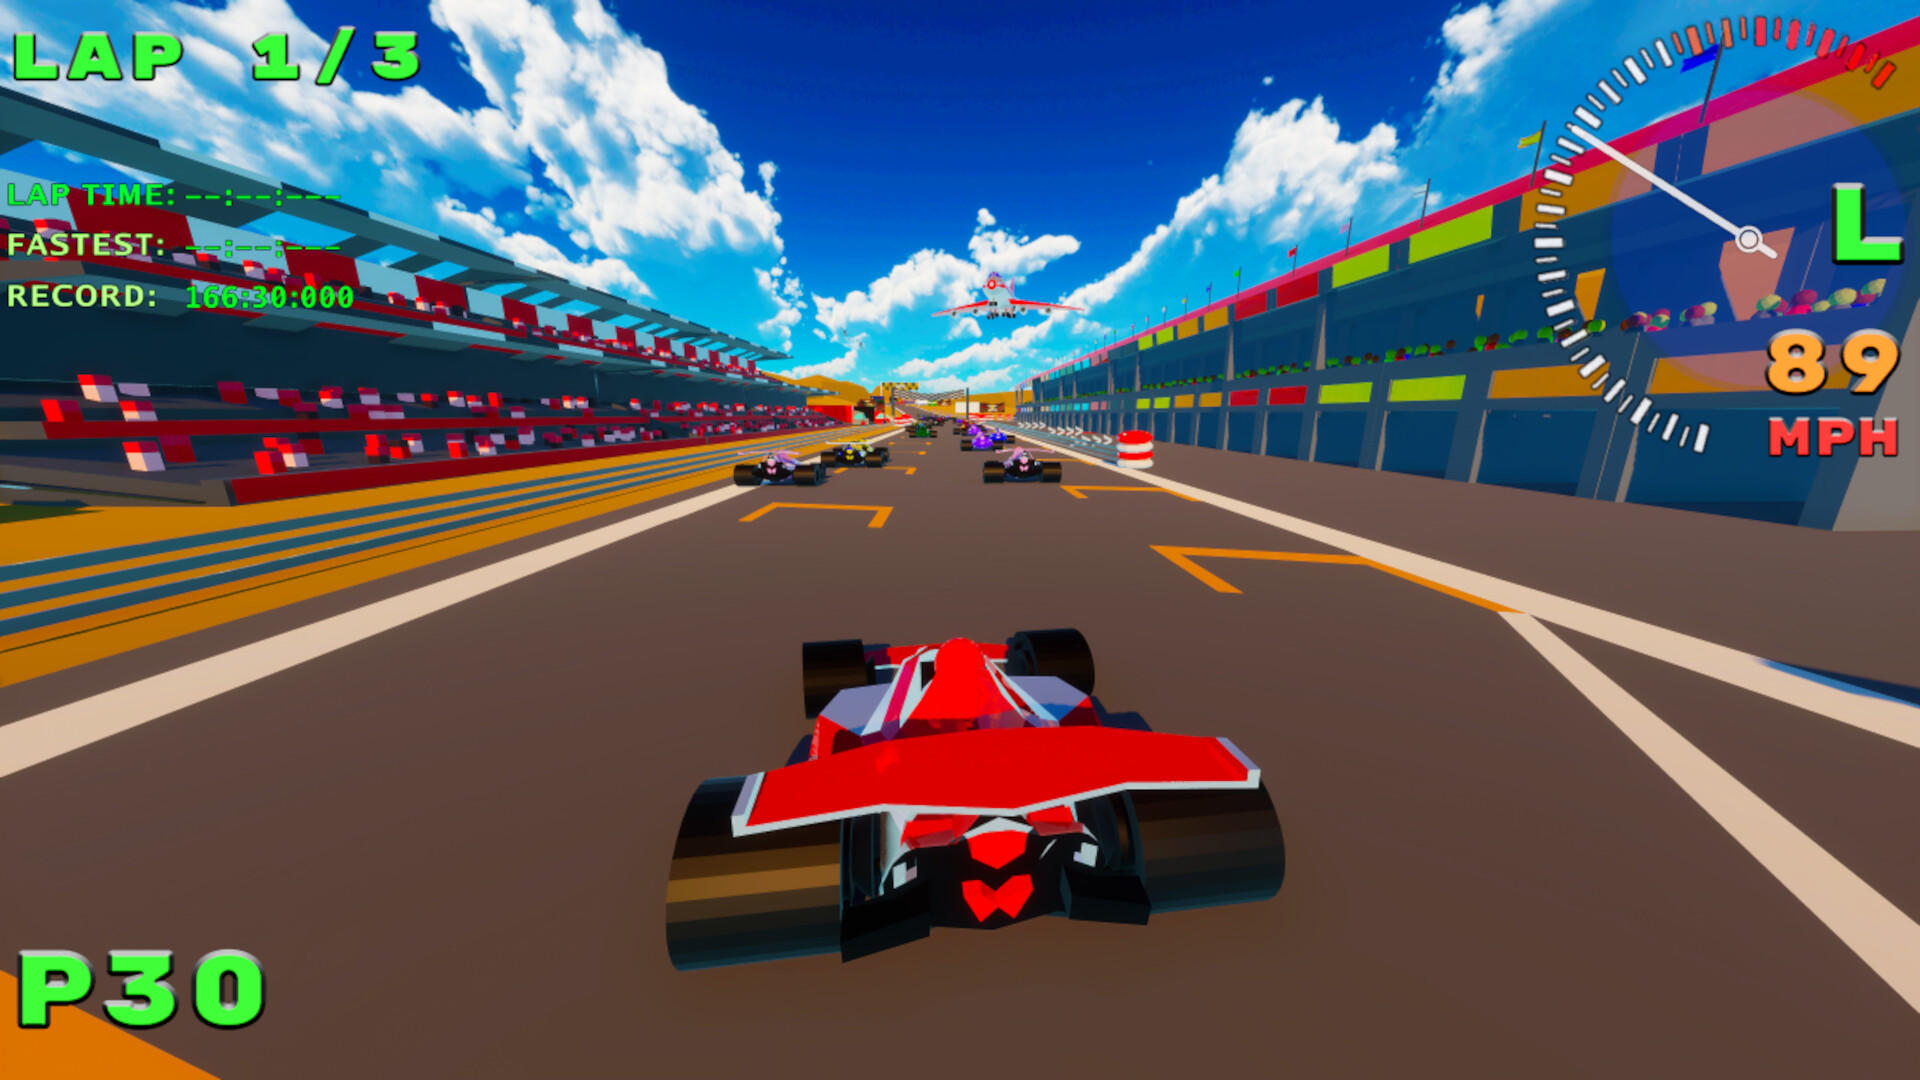 Screenshot 1 of Gran Premio SPGP Super Polygon 